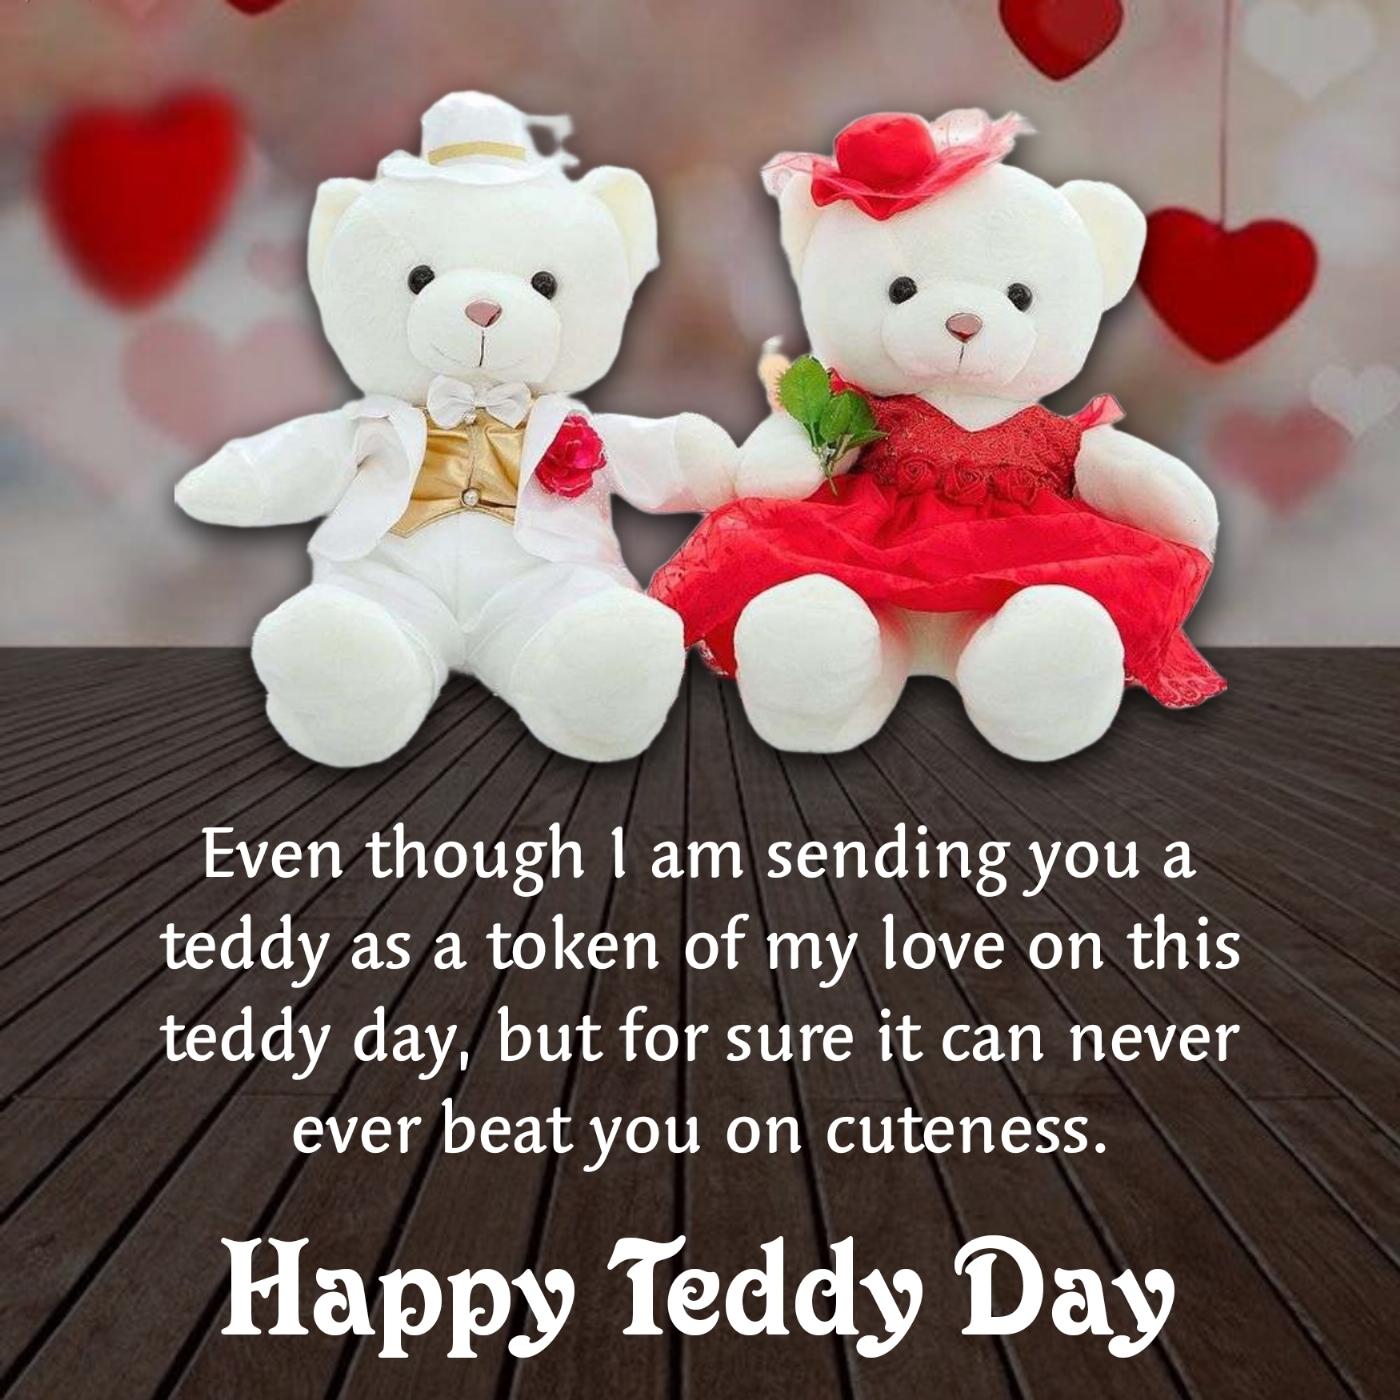 Even though I am sending you a teddy as a token of my love